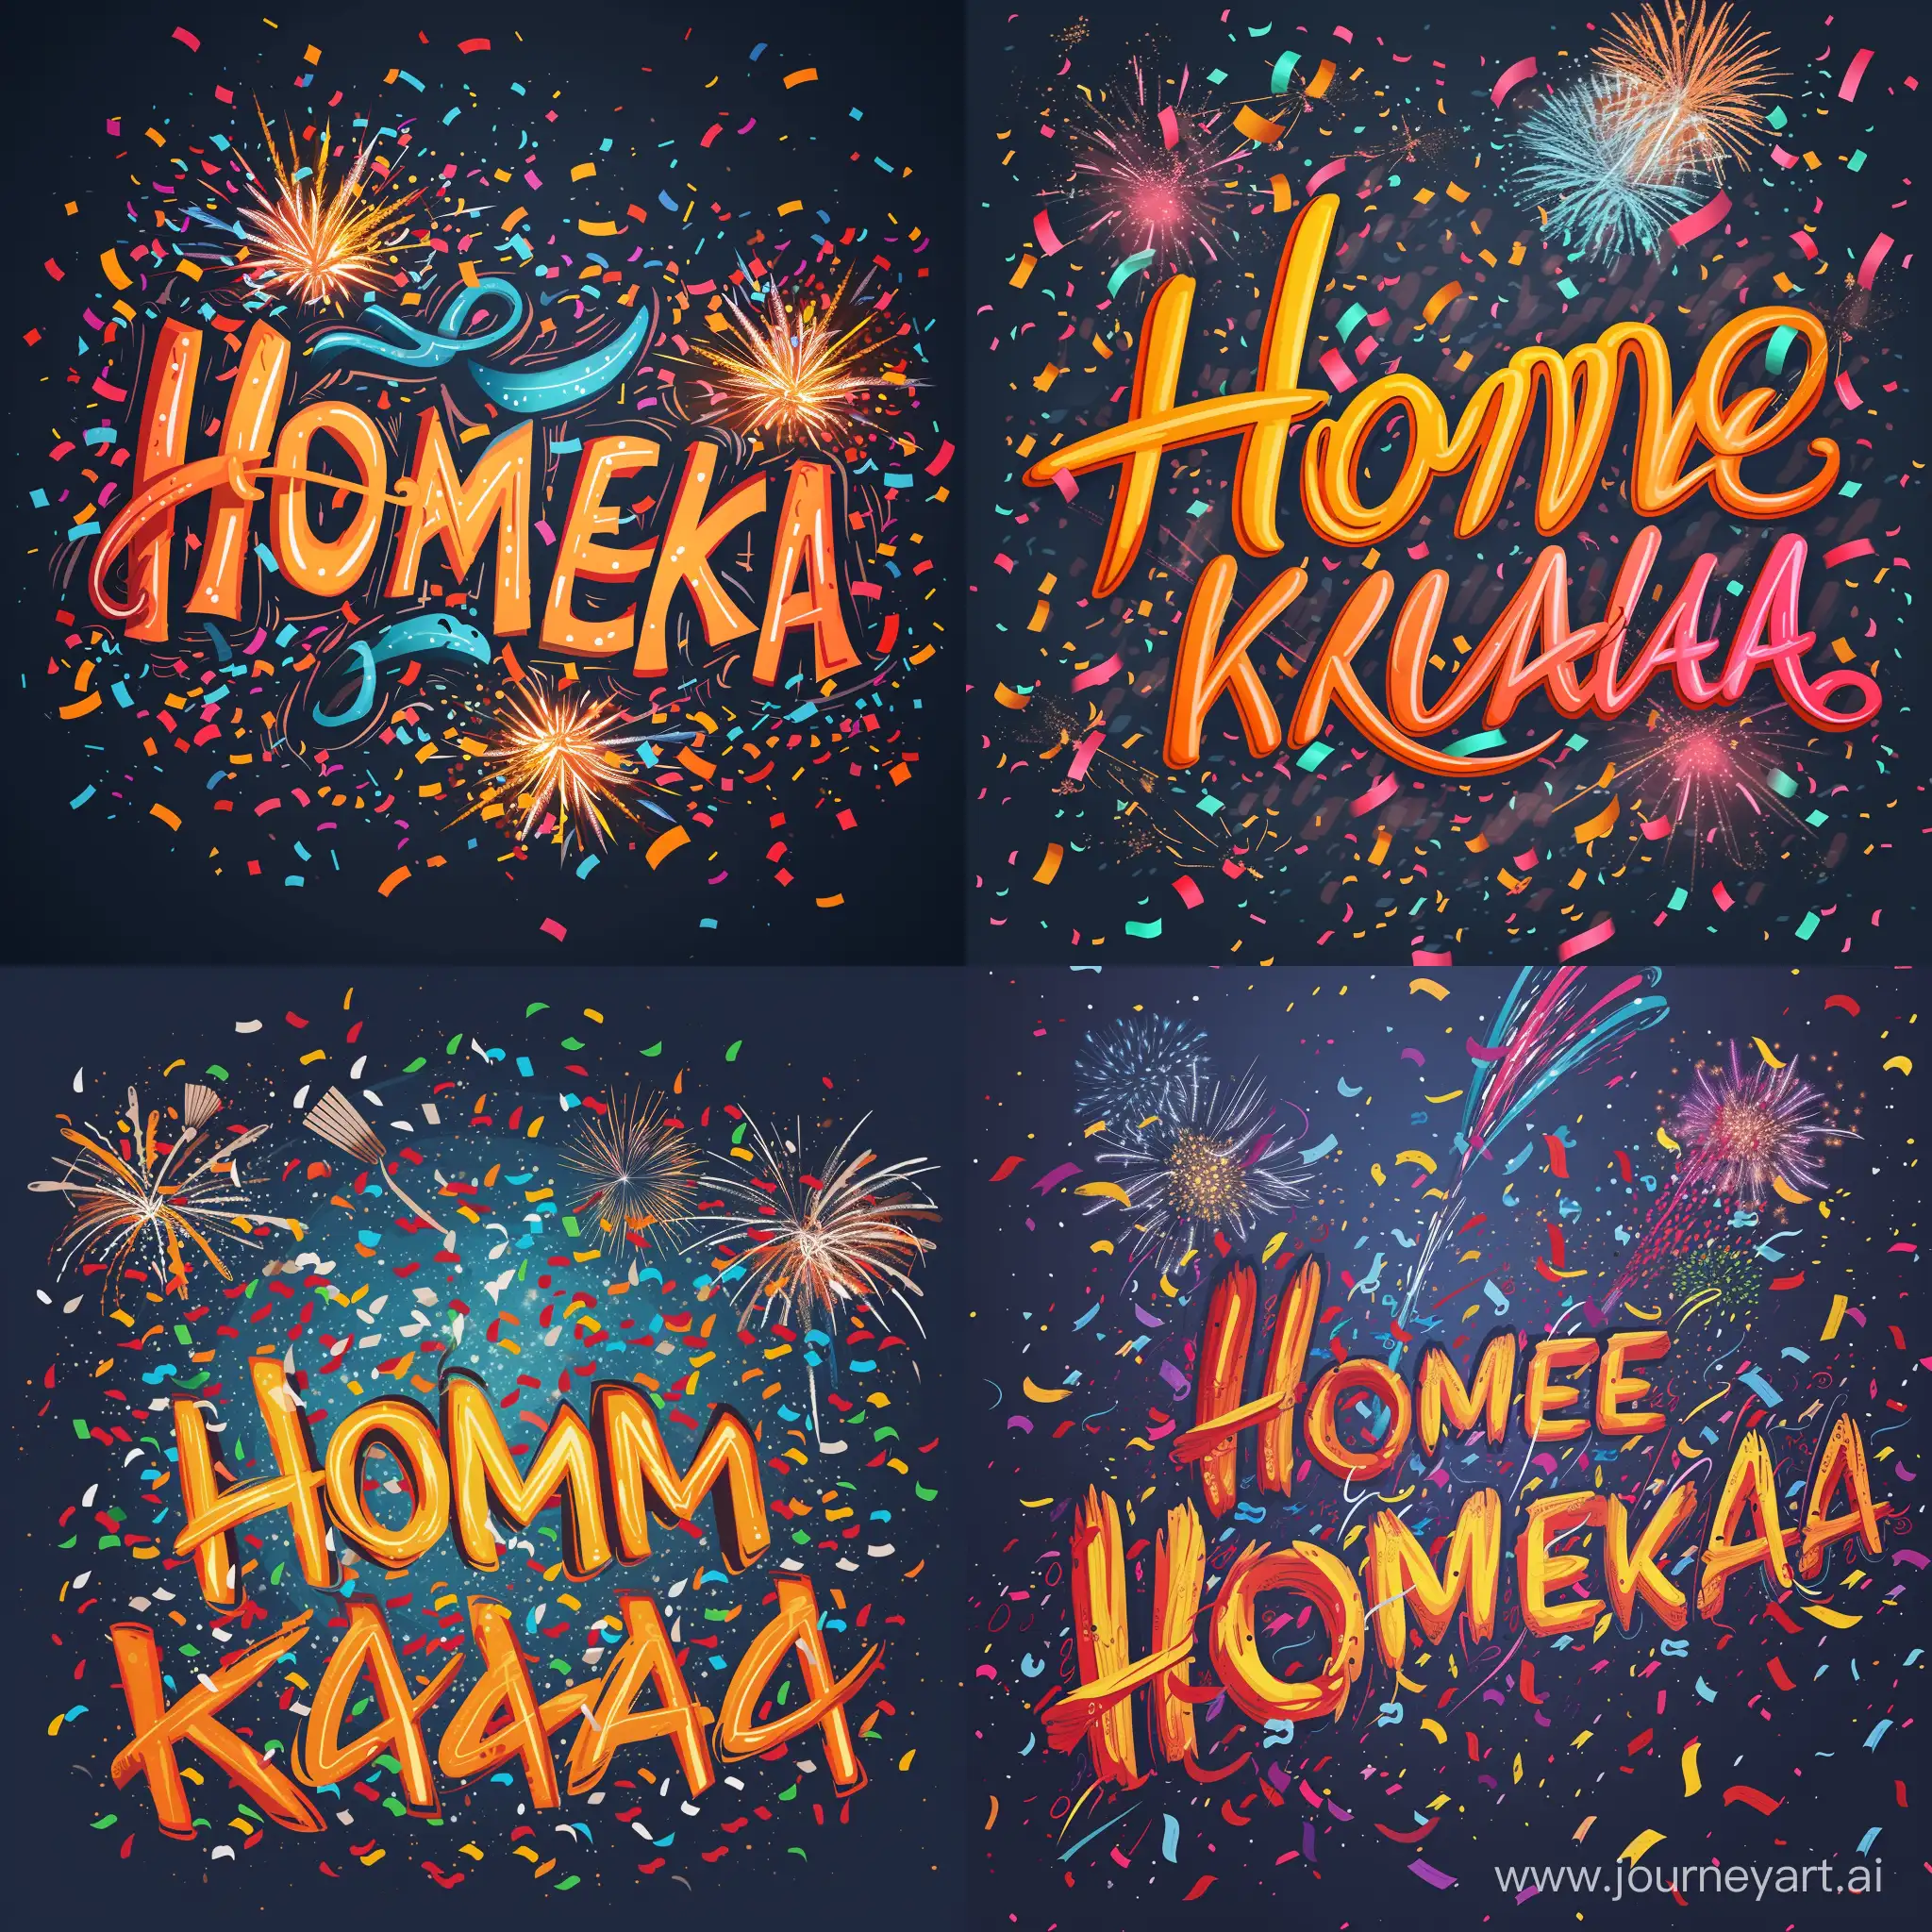 Vibrant-Celebration-HOMEKALA-in-Script-Calligraphy-Amidst-Confetti-and-Fireworks